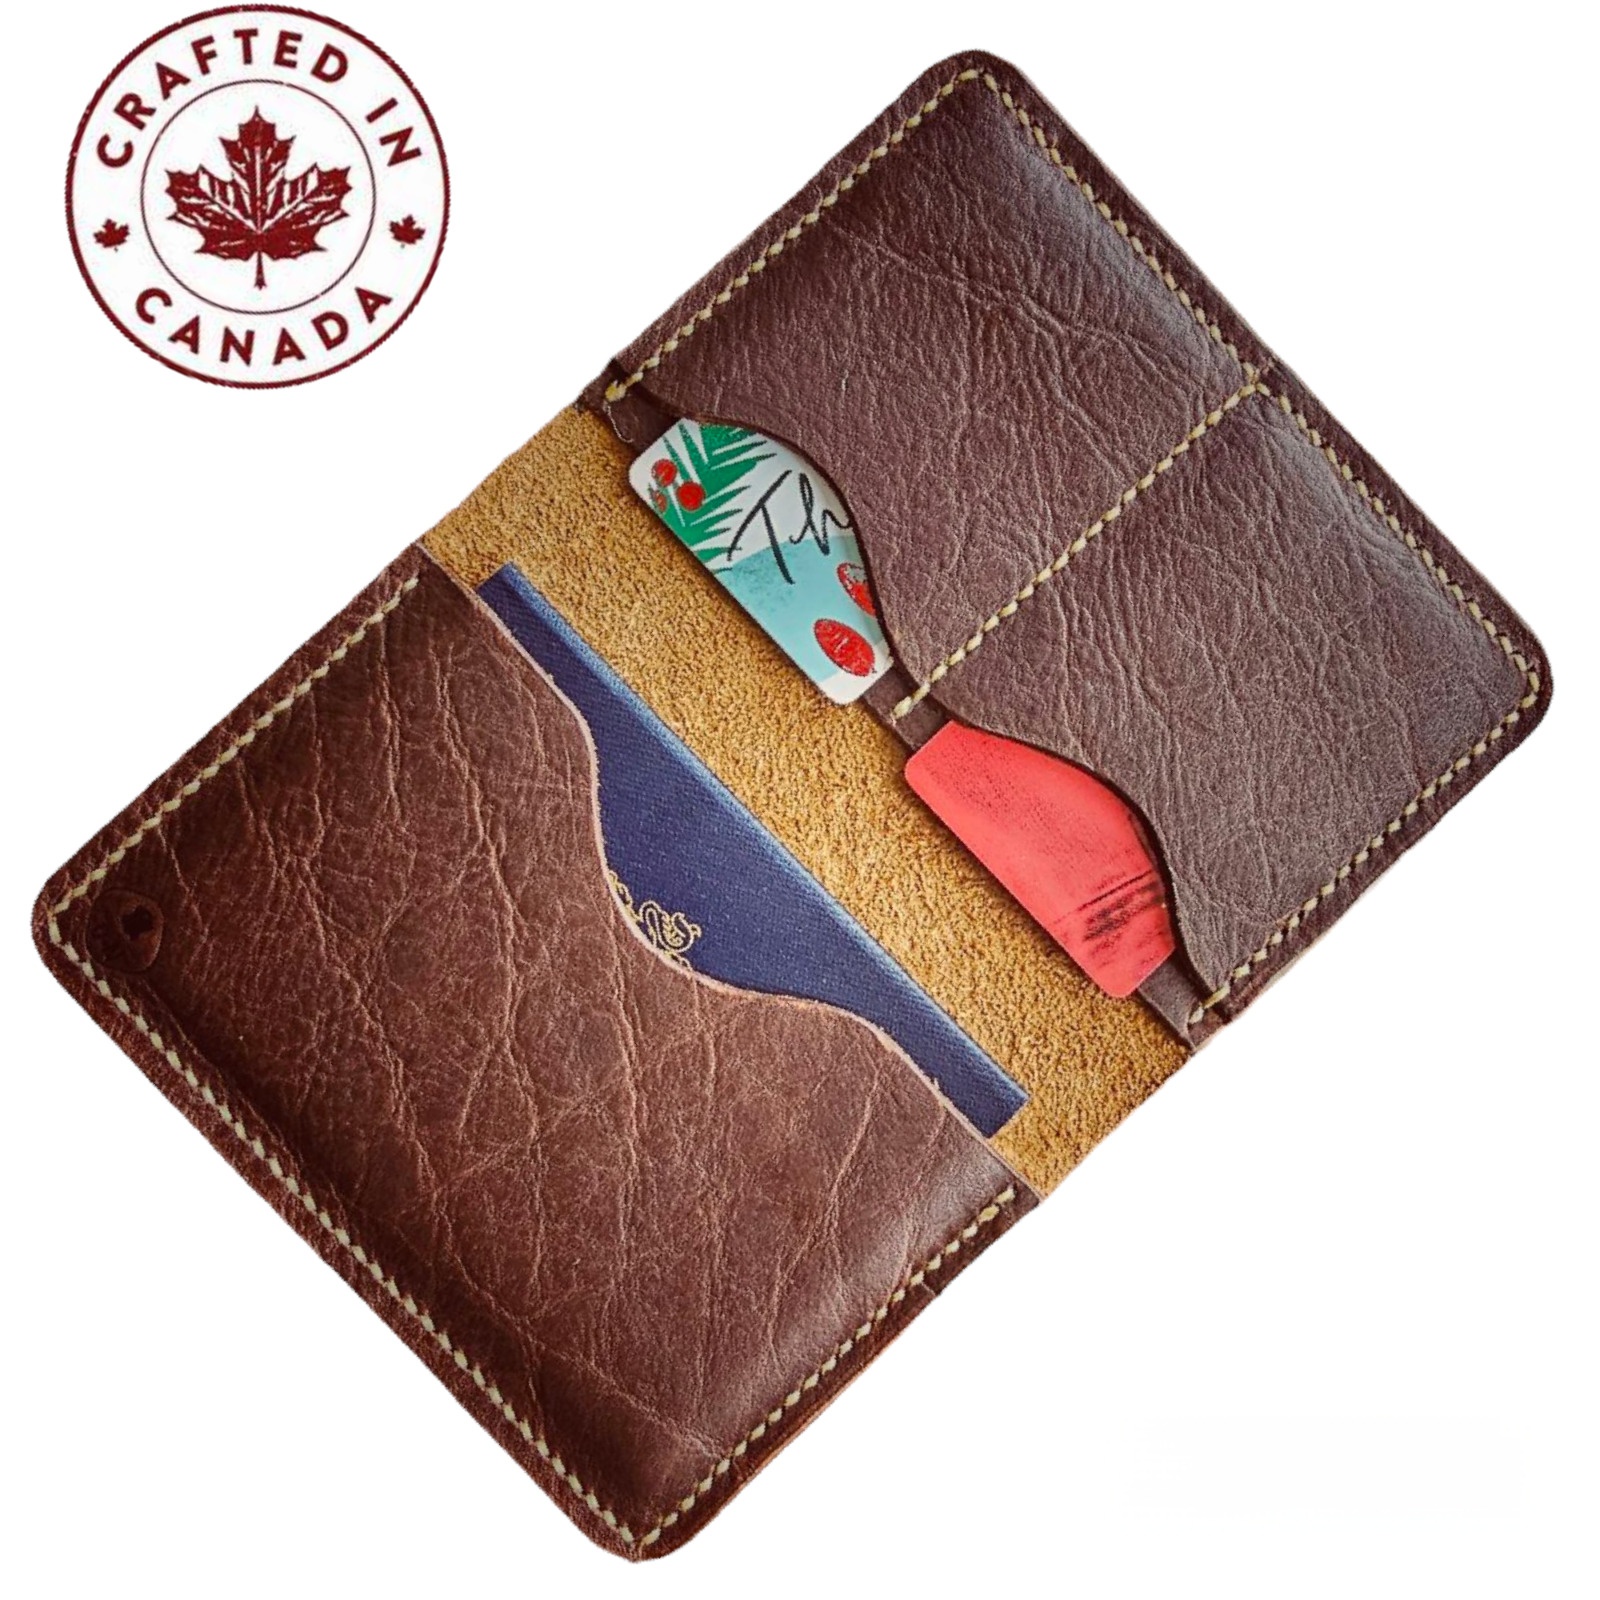 Handmade Leather Passport Holder and Travel Wallet